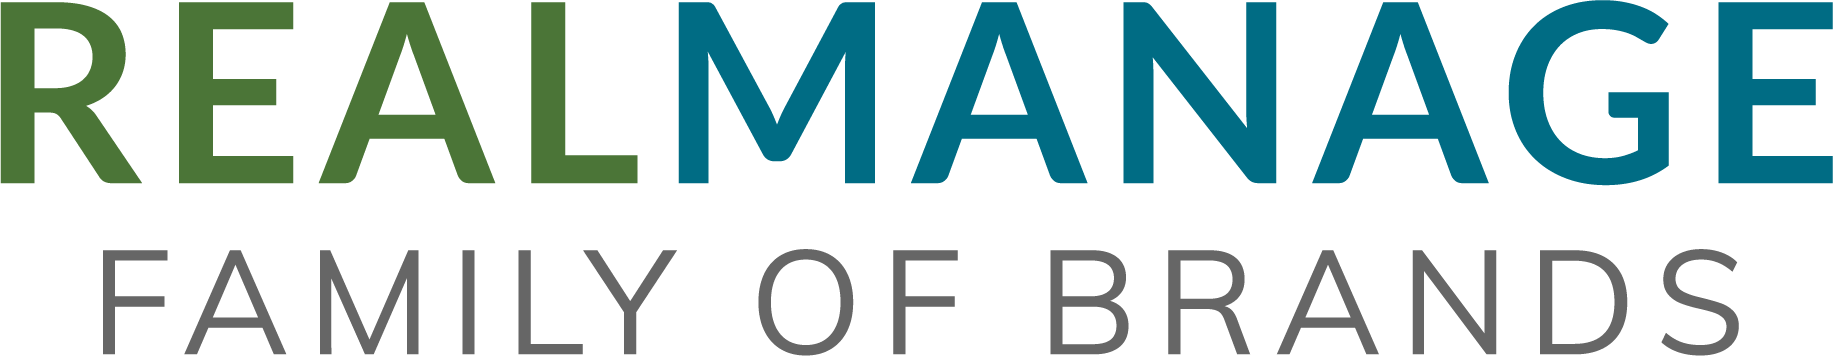 RealManage Family of Brands - GA logo